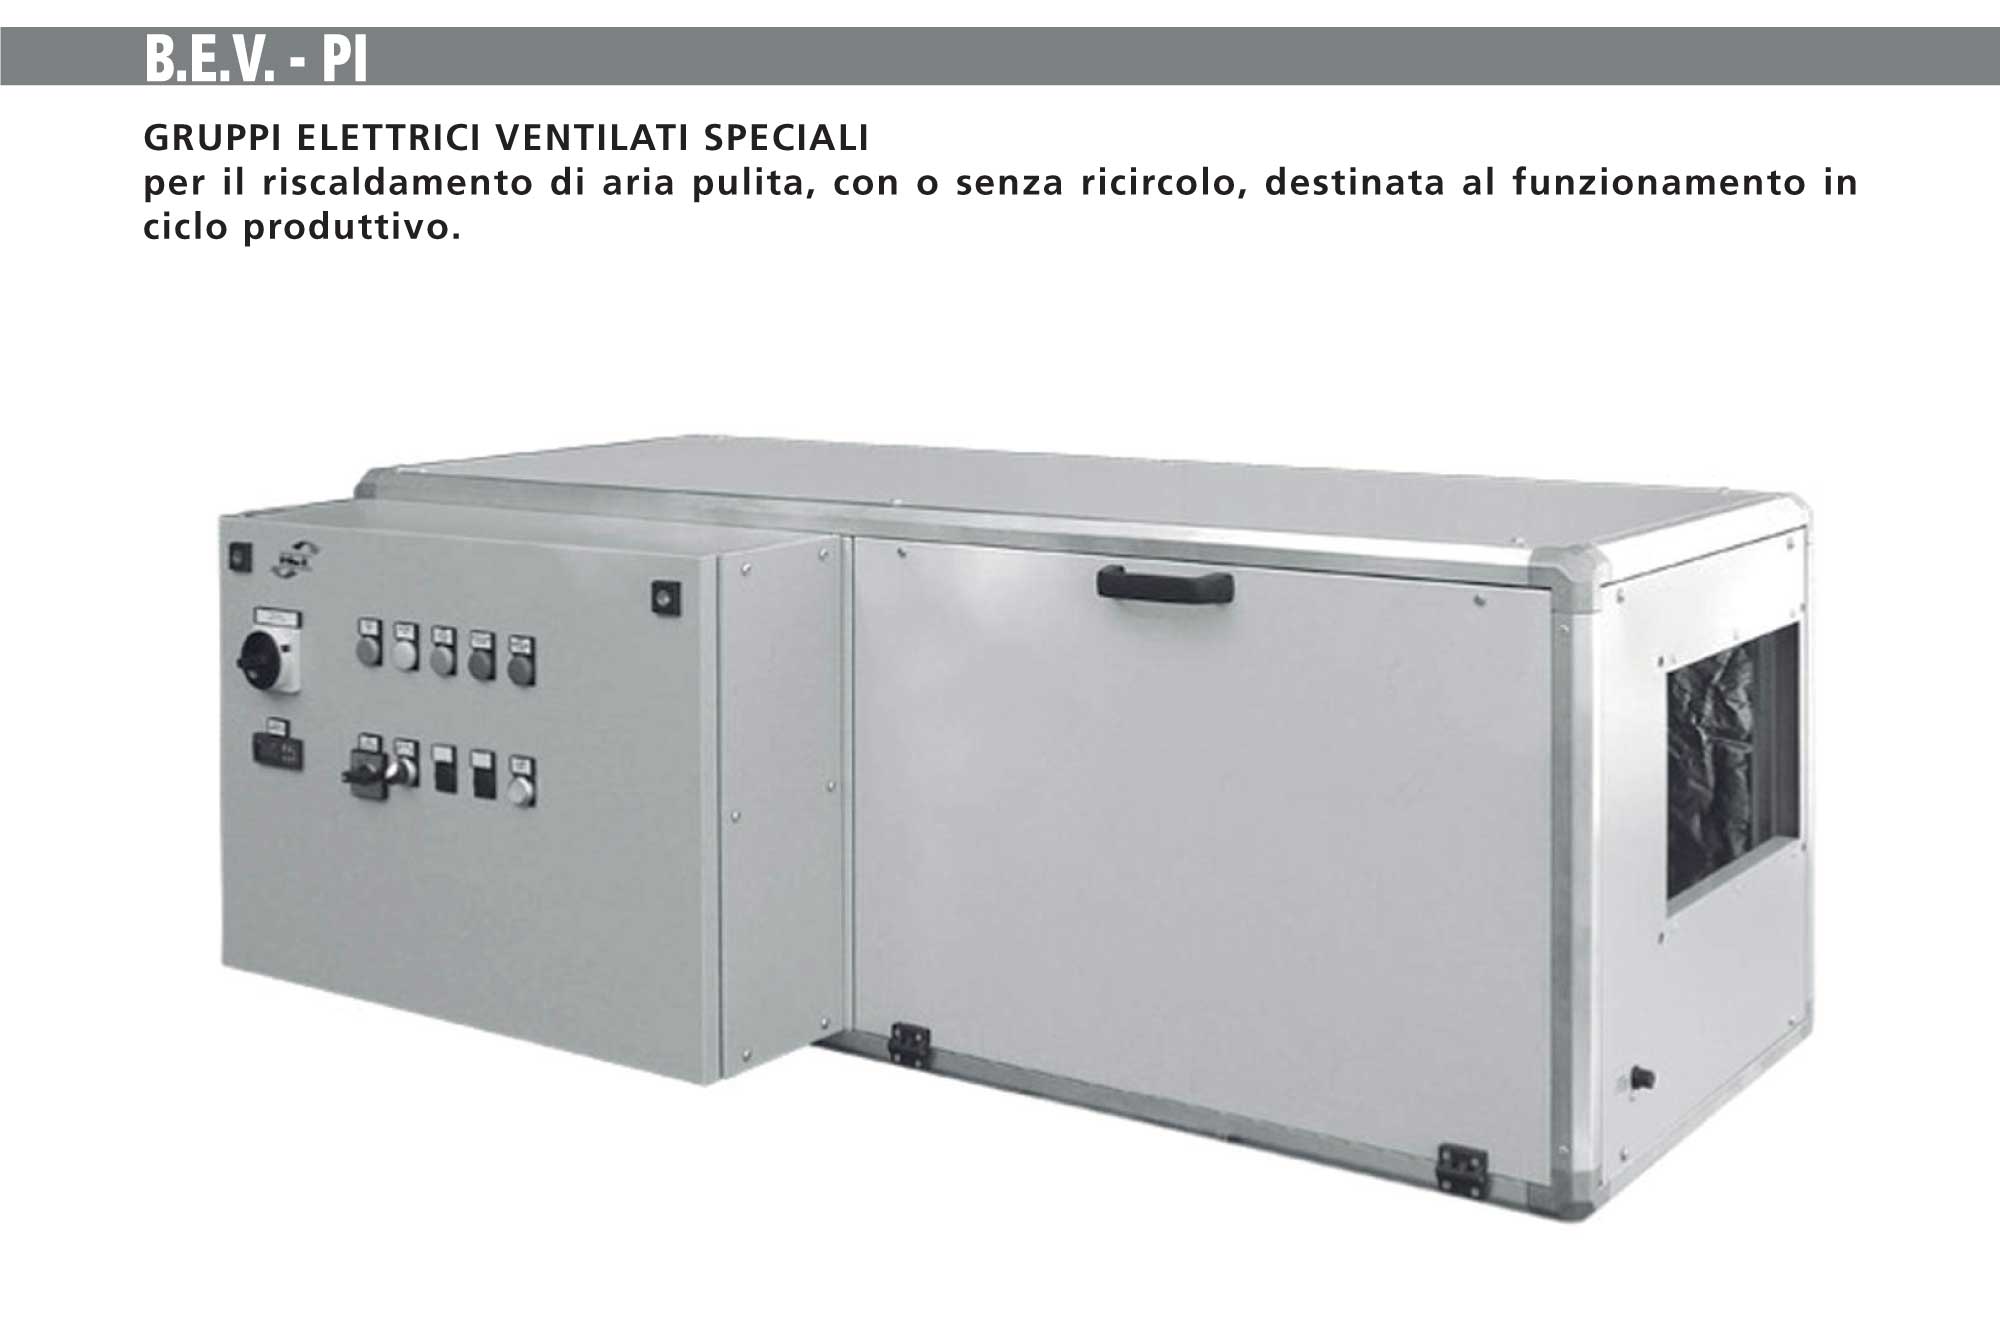 Special ventilated electric units BEV-PI